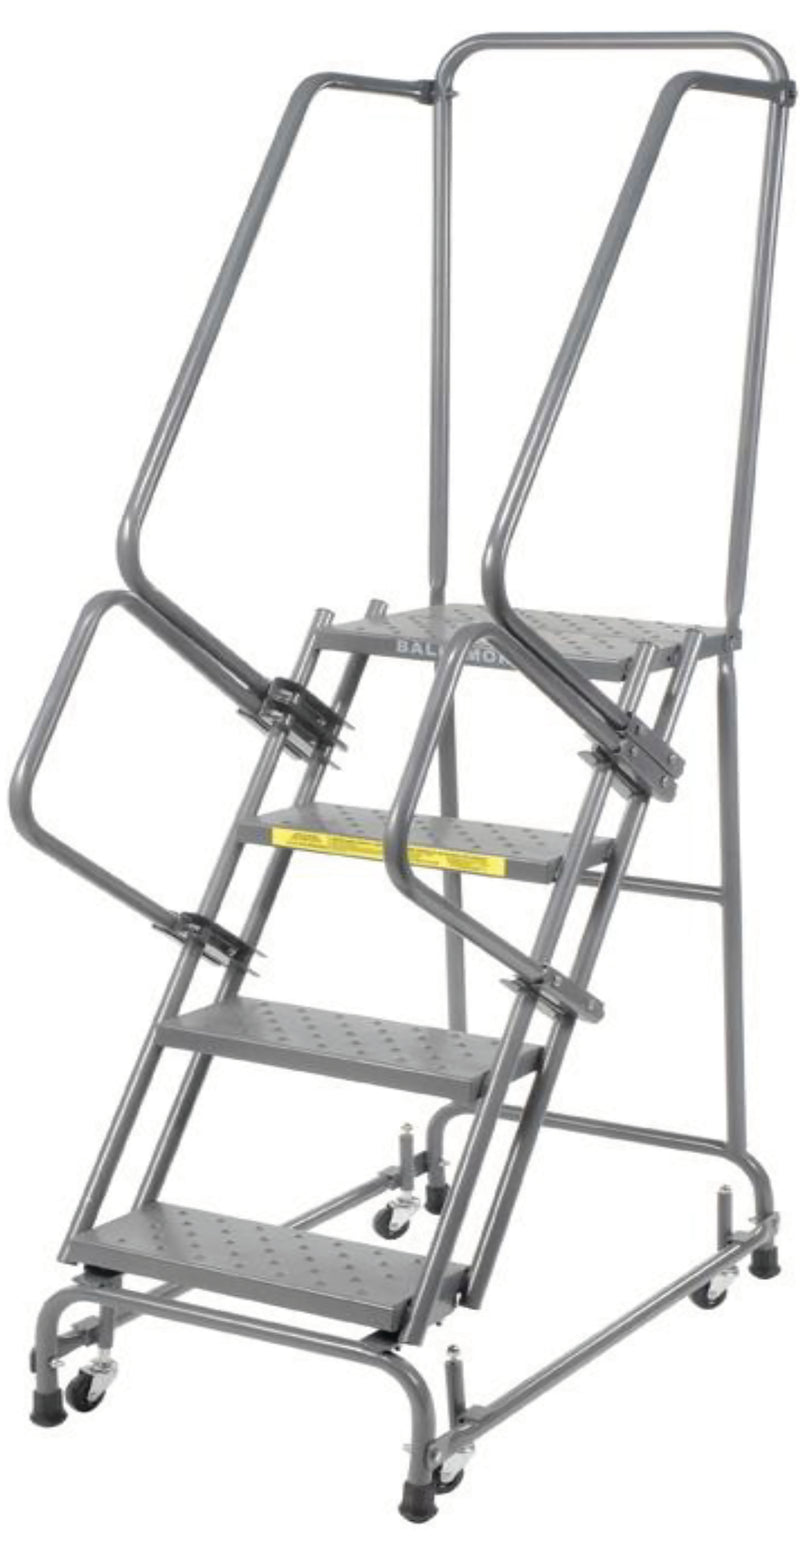 Spring Loaded Caster Ladder - 4 Step, Handrails - Ballymore